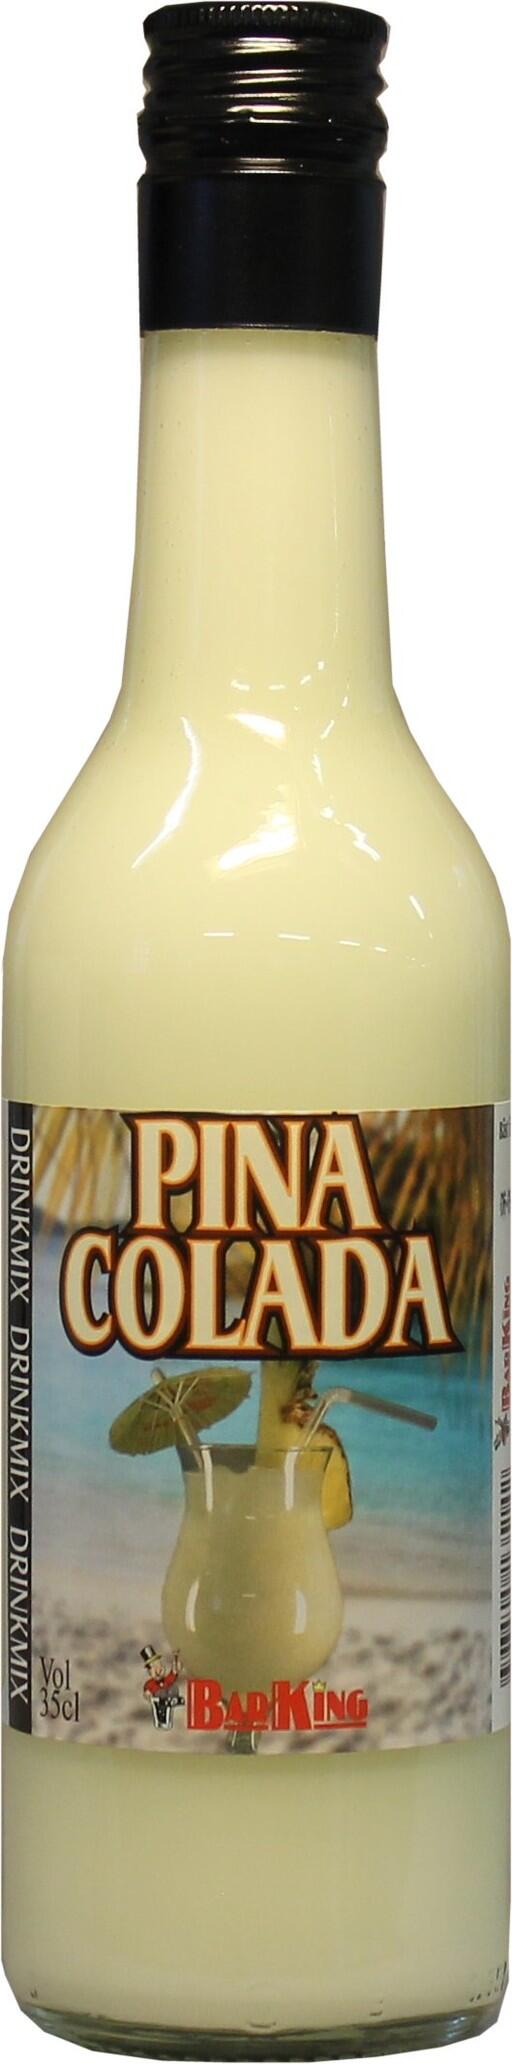 Pina Colada 35cl